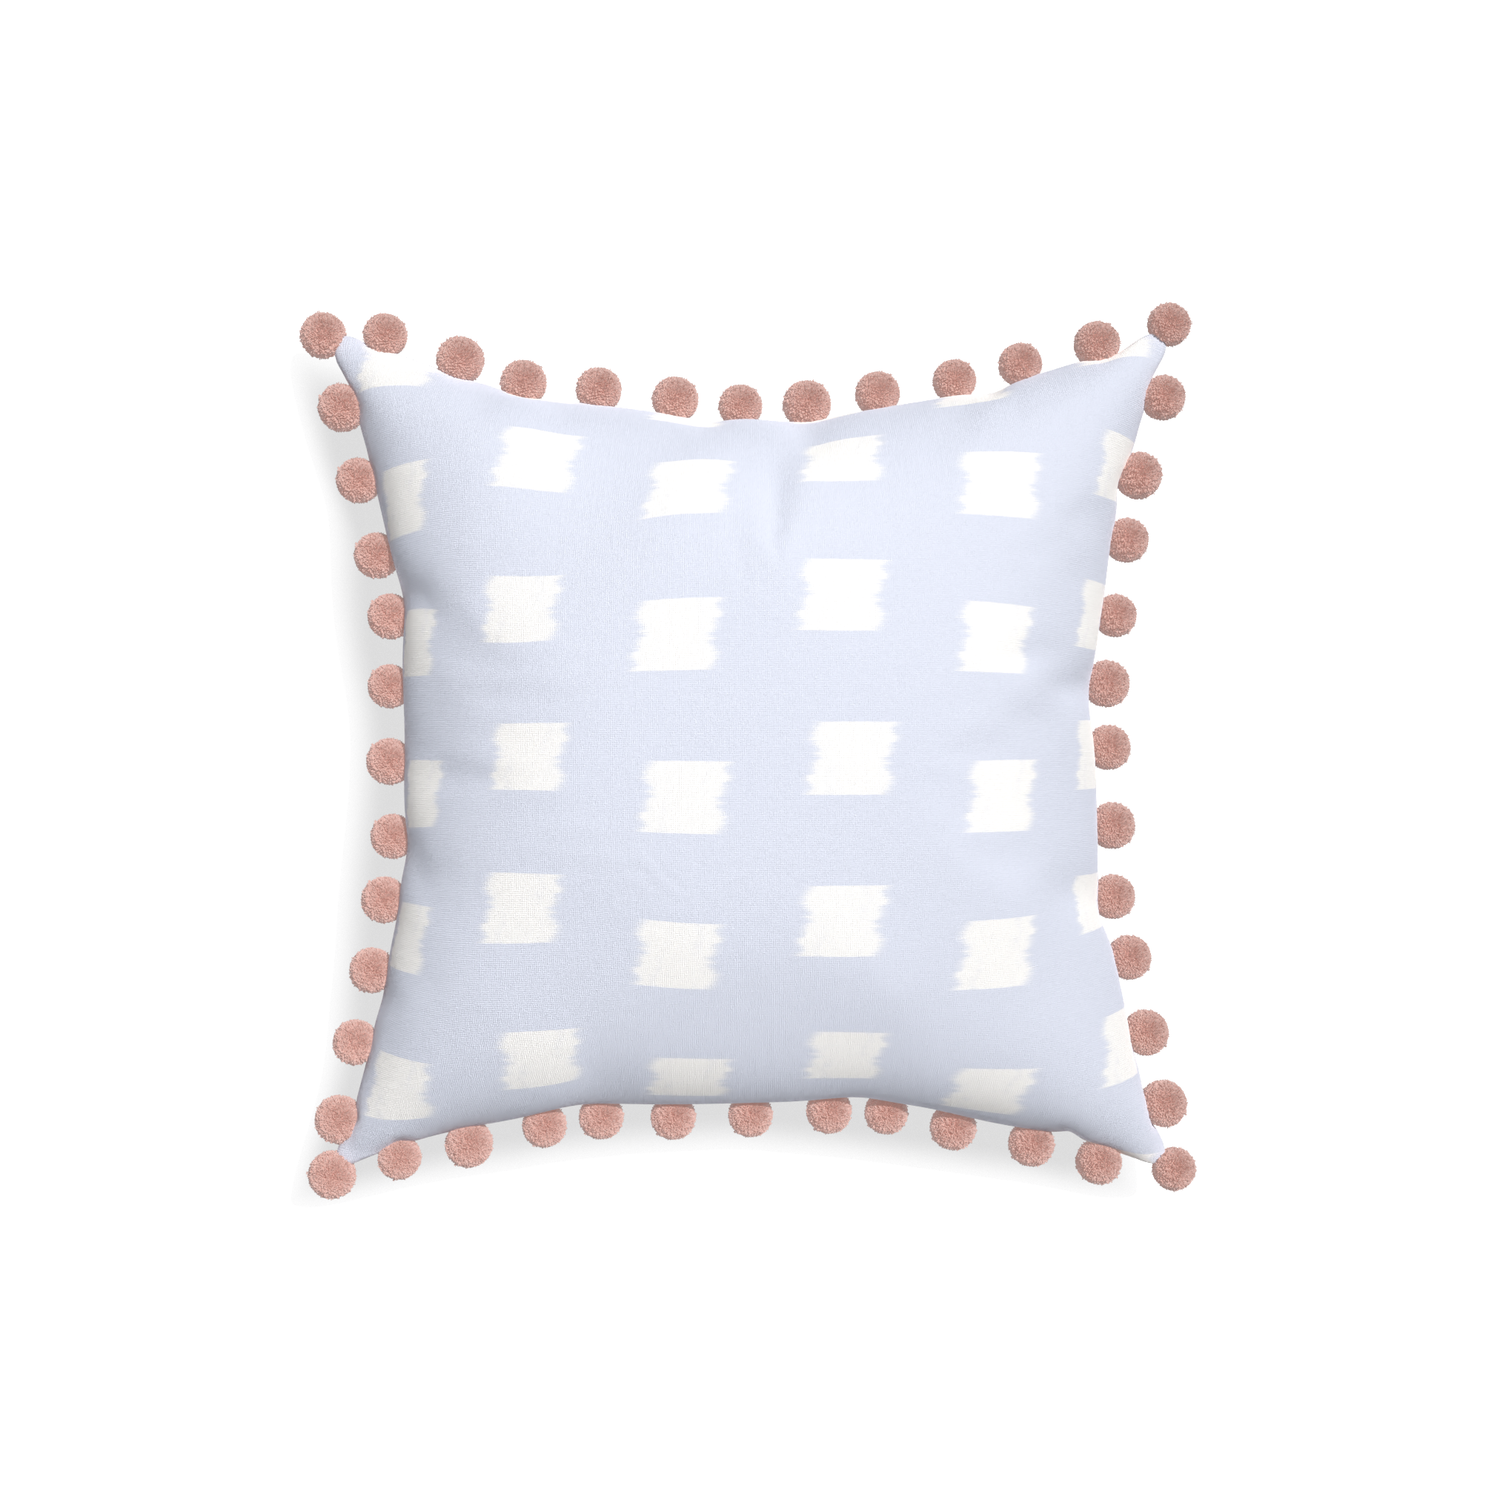 18-square denton custom sky blue patternpillow with rose pom pom on white background